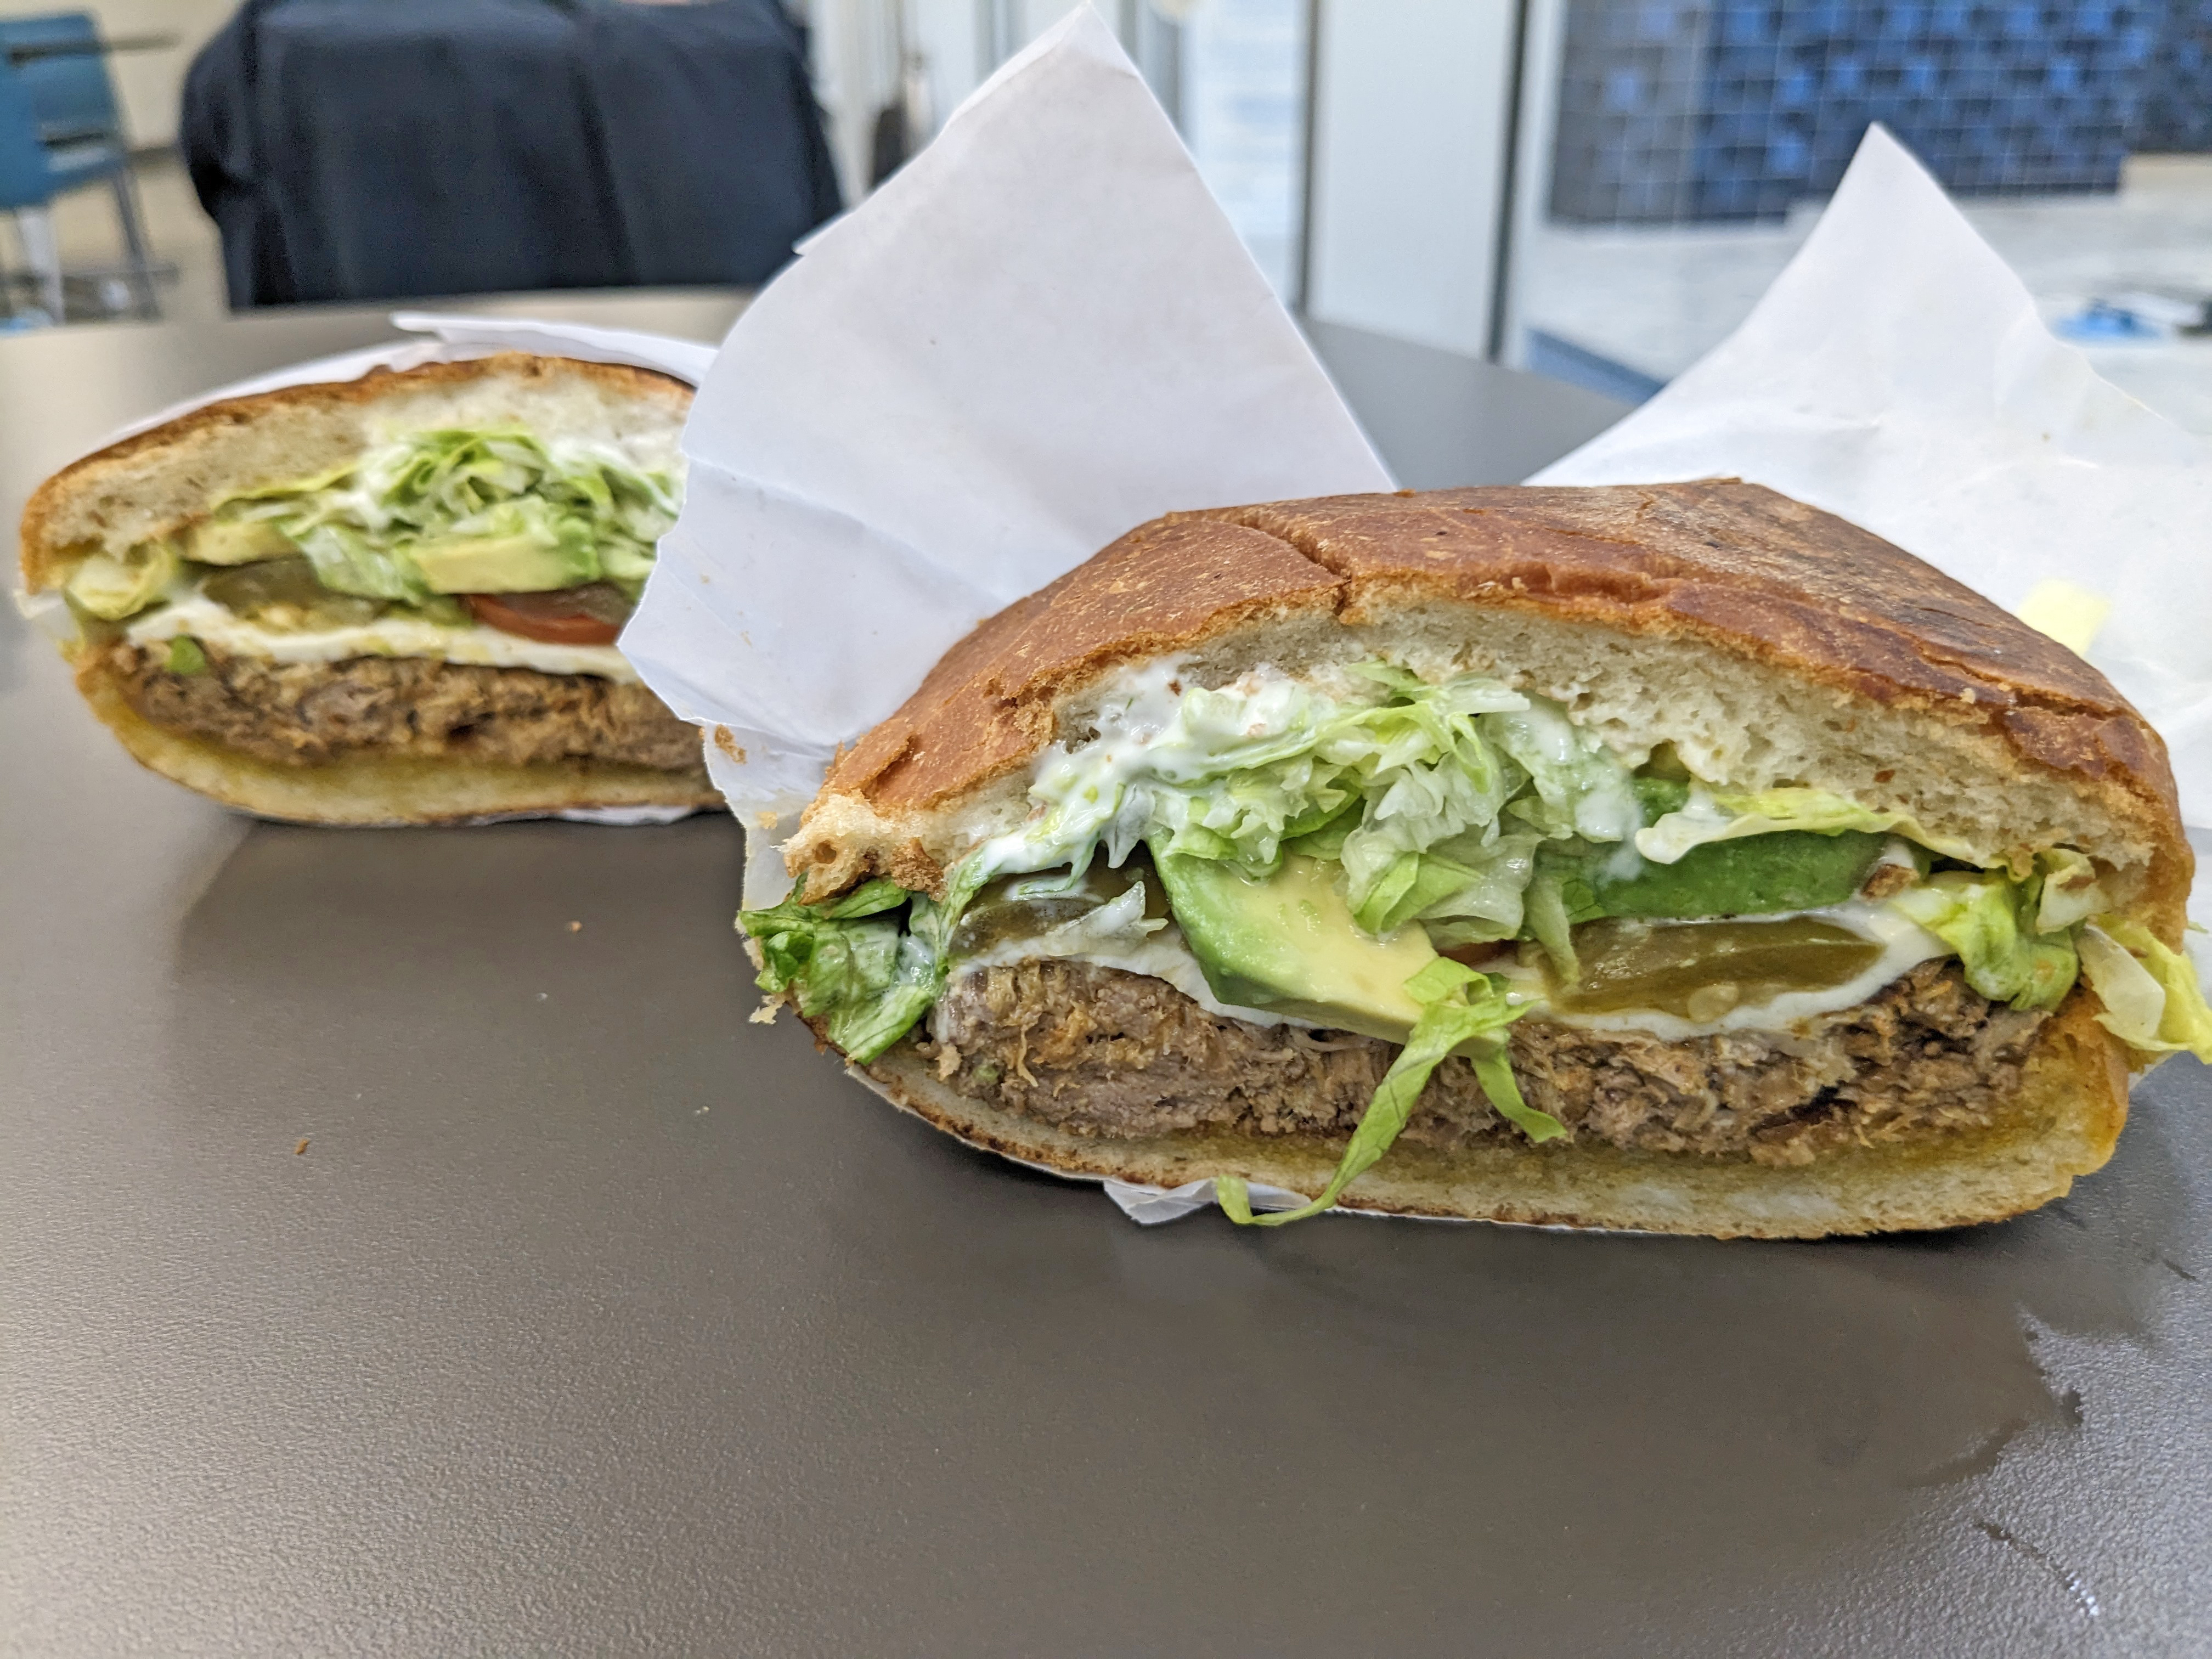 A domed sandwich cut in half revealing meat, avocado, and lettuce.